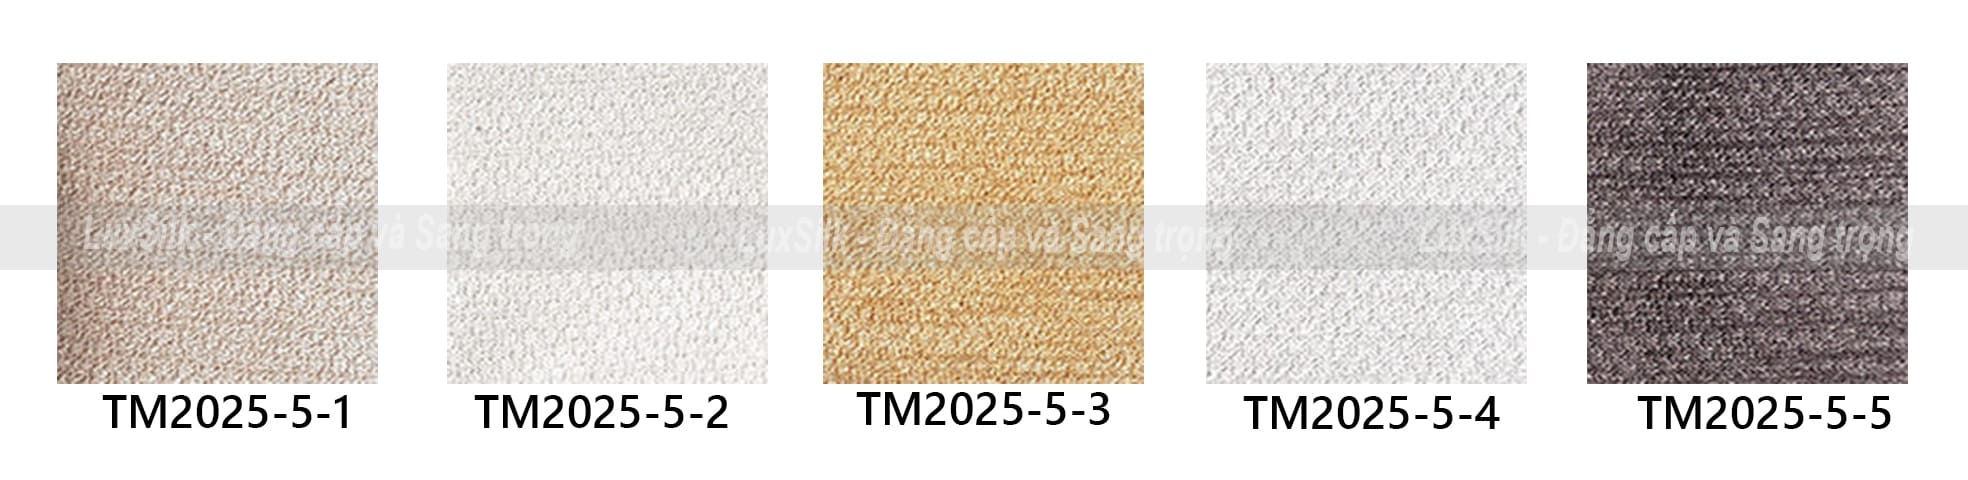 Rèm vải TM2025-5